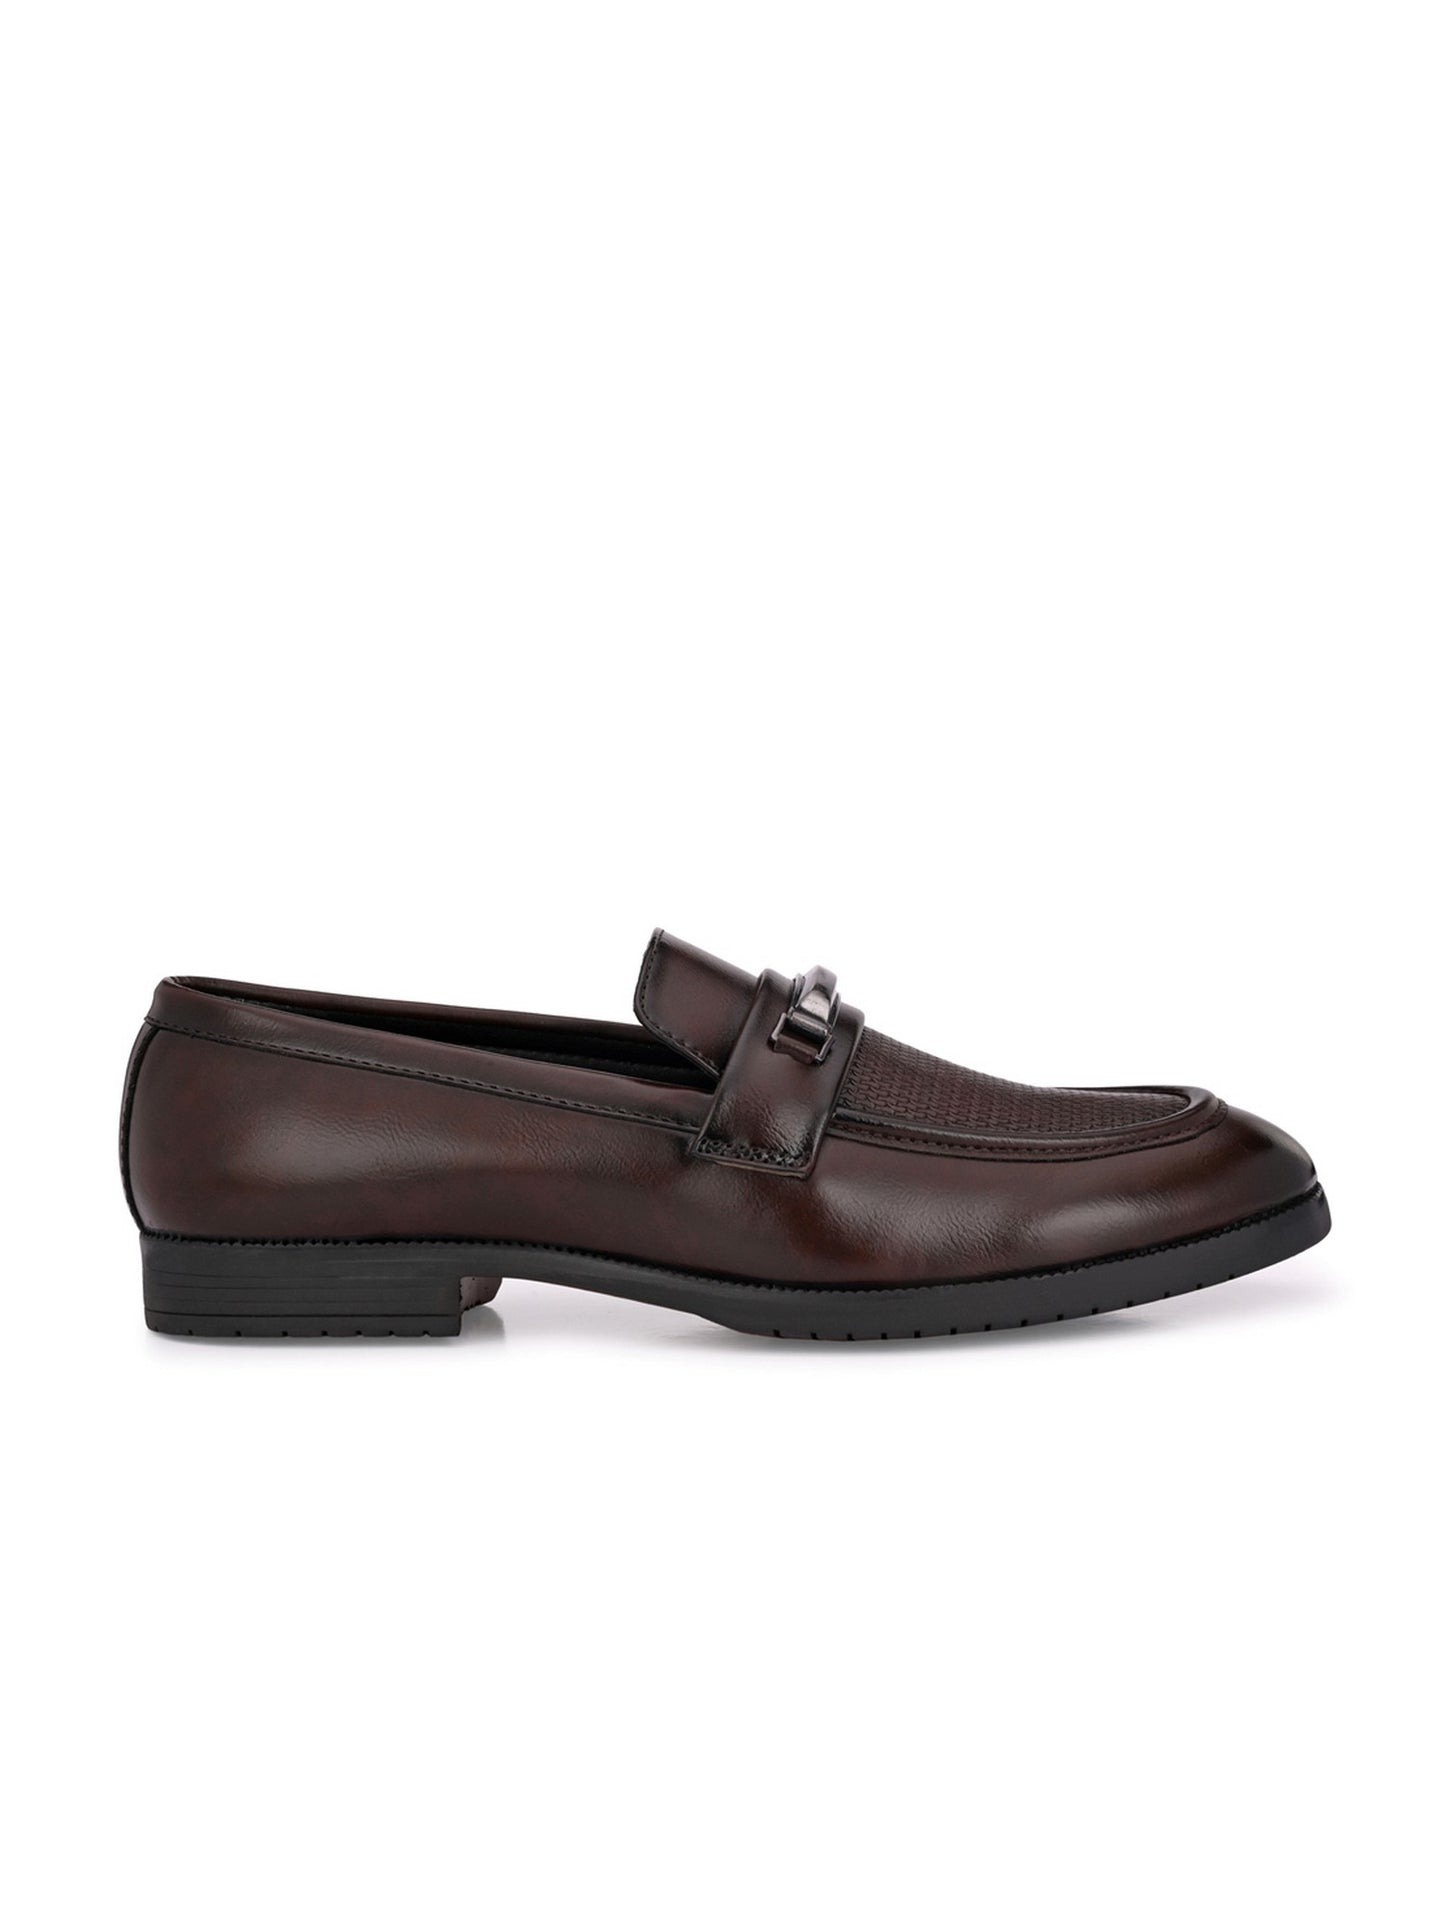 Guava Men's Brown Slip On Party Formal Shoes (GV15JA788)